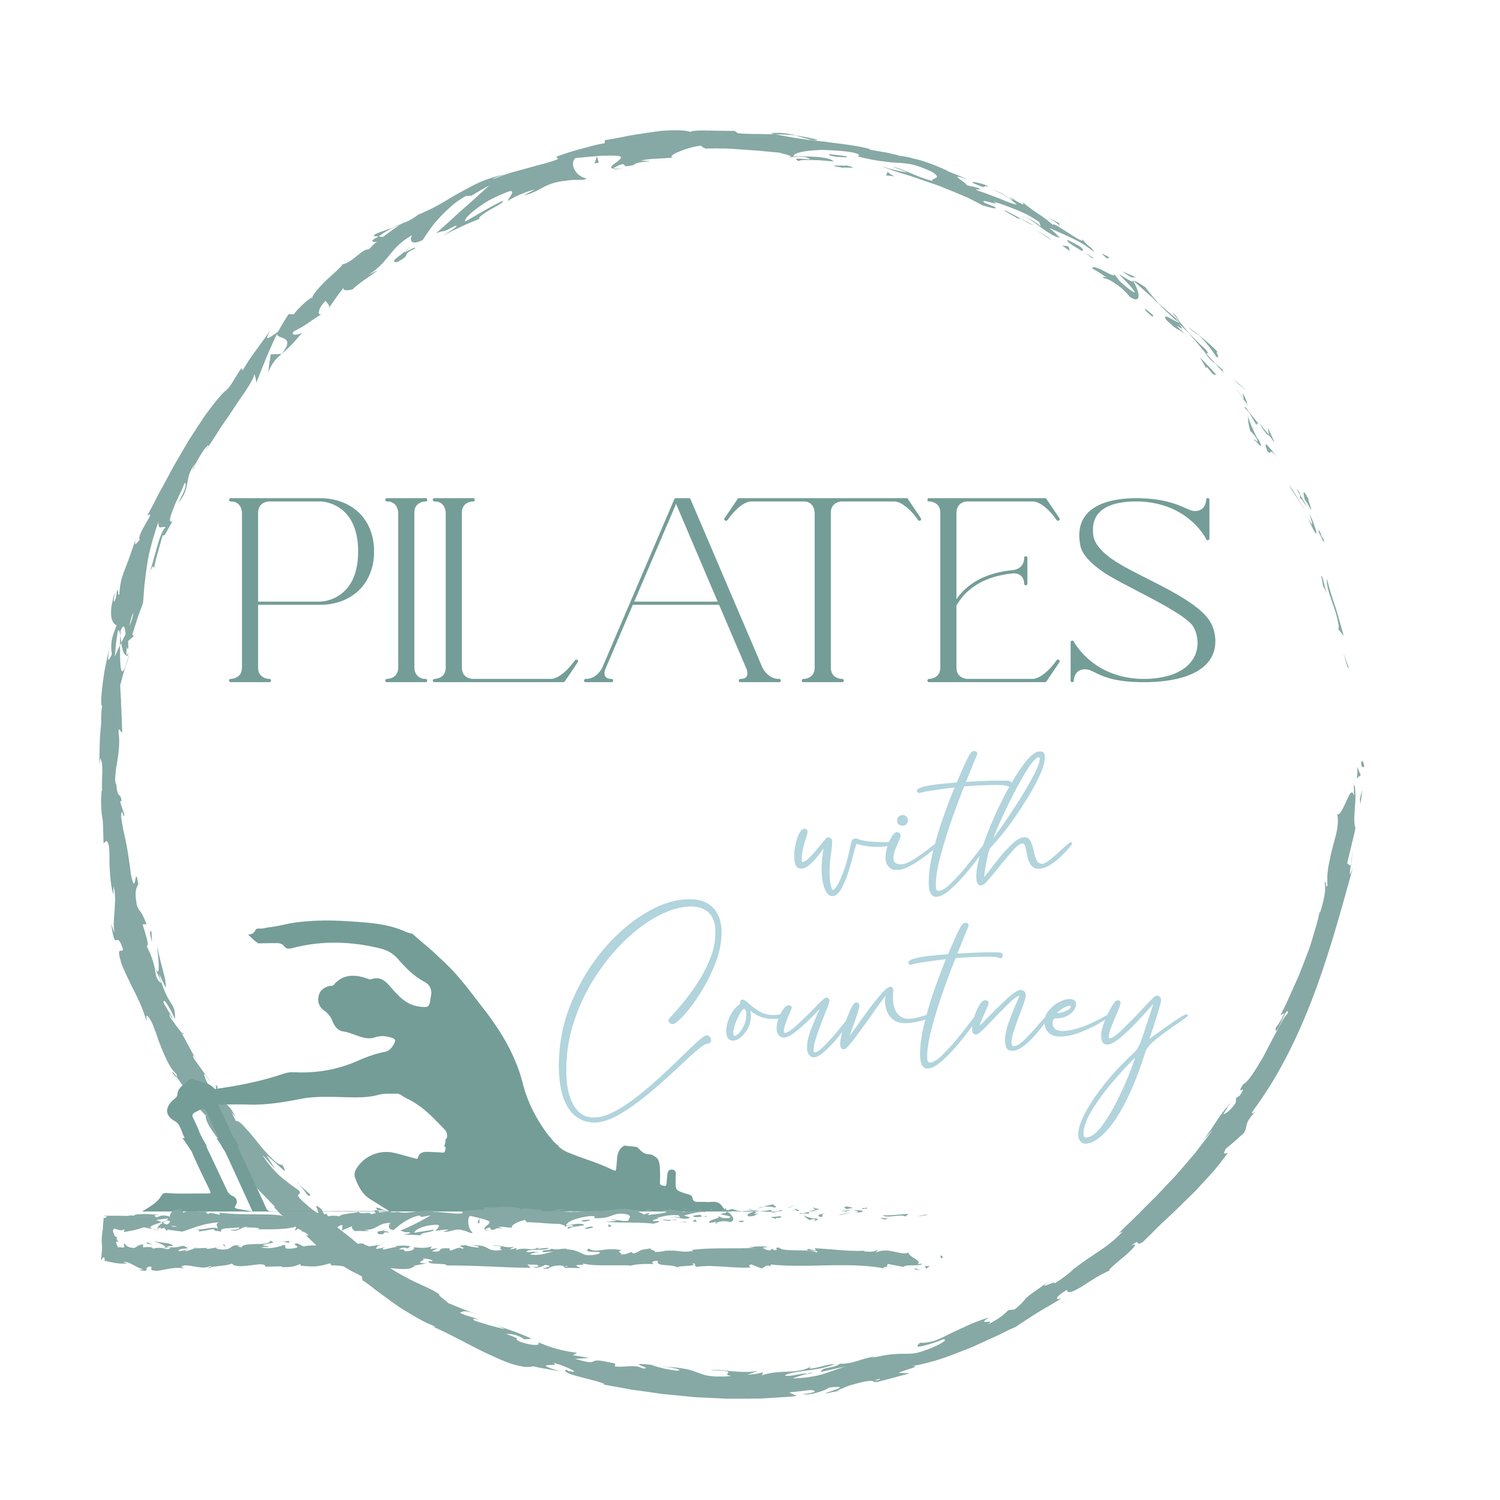 Pilates with Courtney